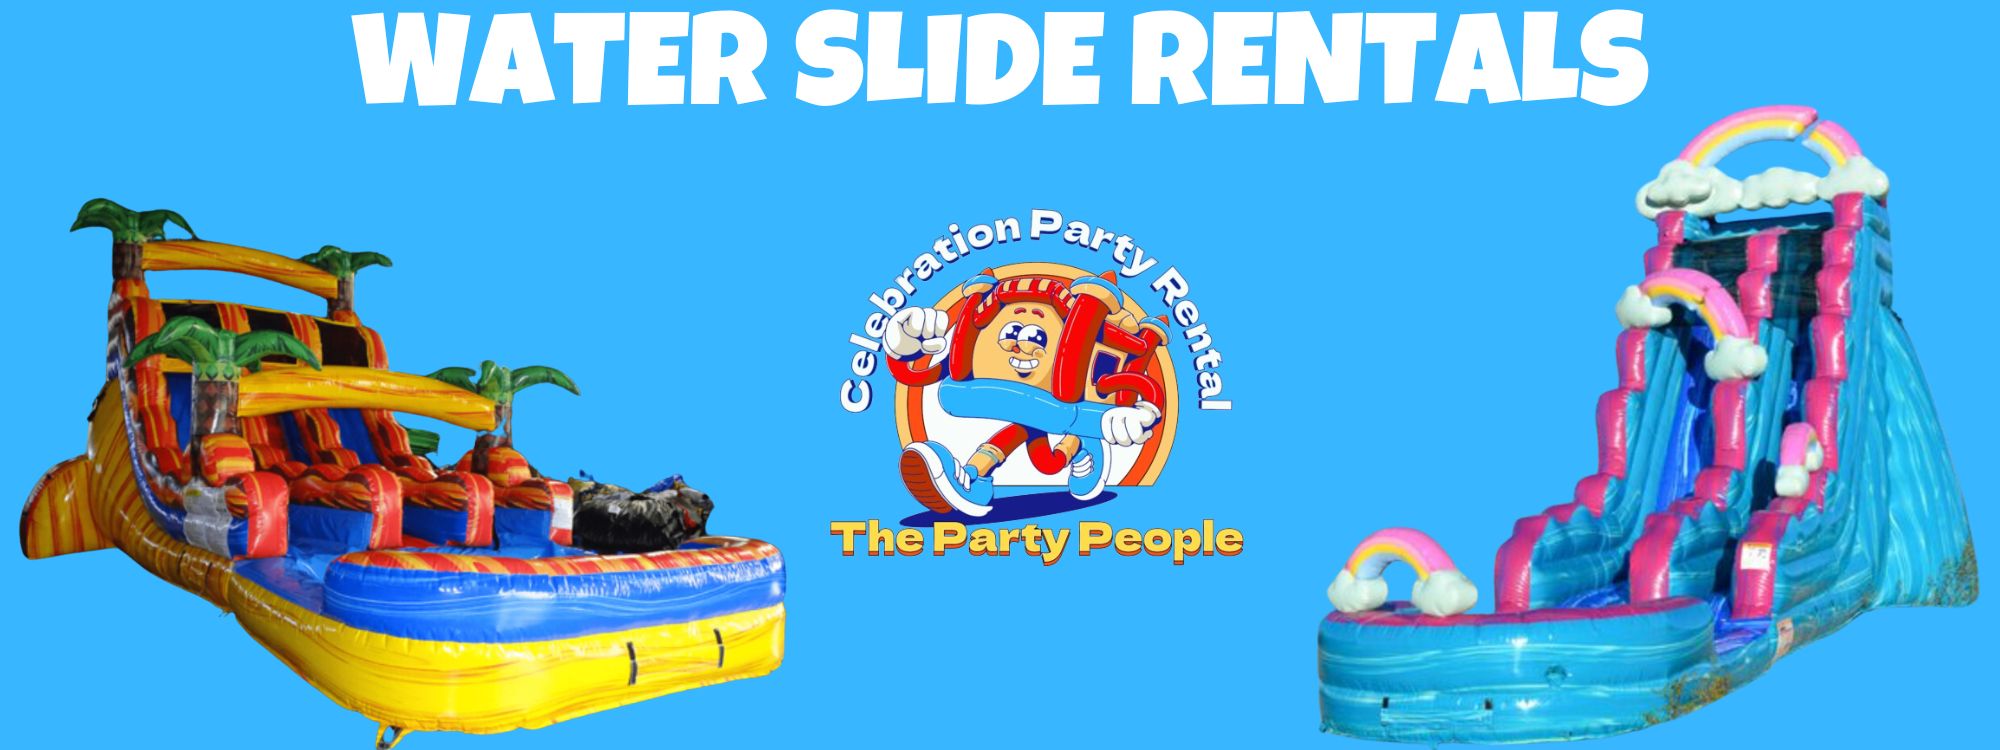 Water Slide Rentals - Celebrations Party Rental